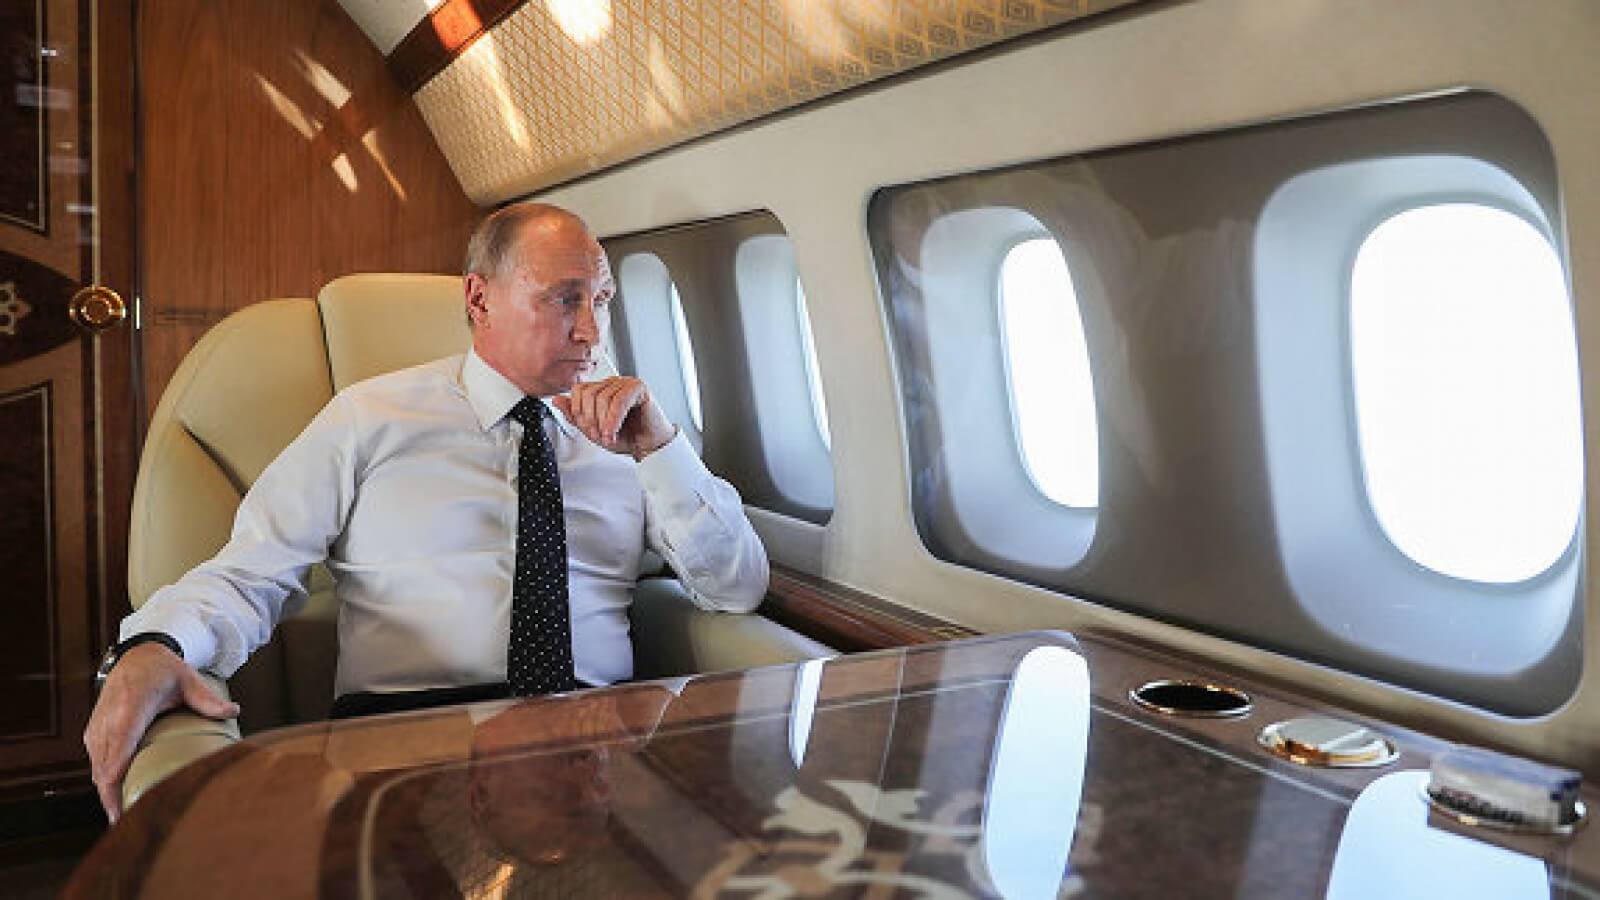 On board President Putin's lavish jet